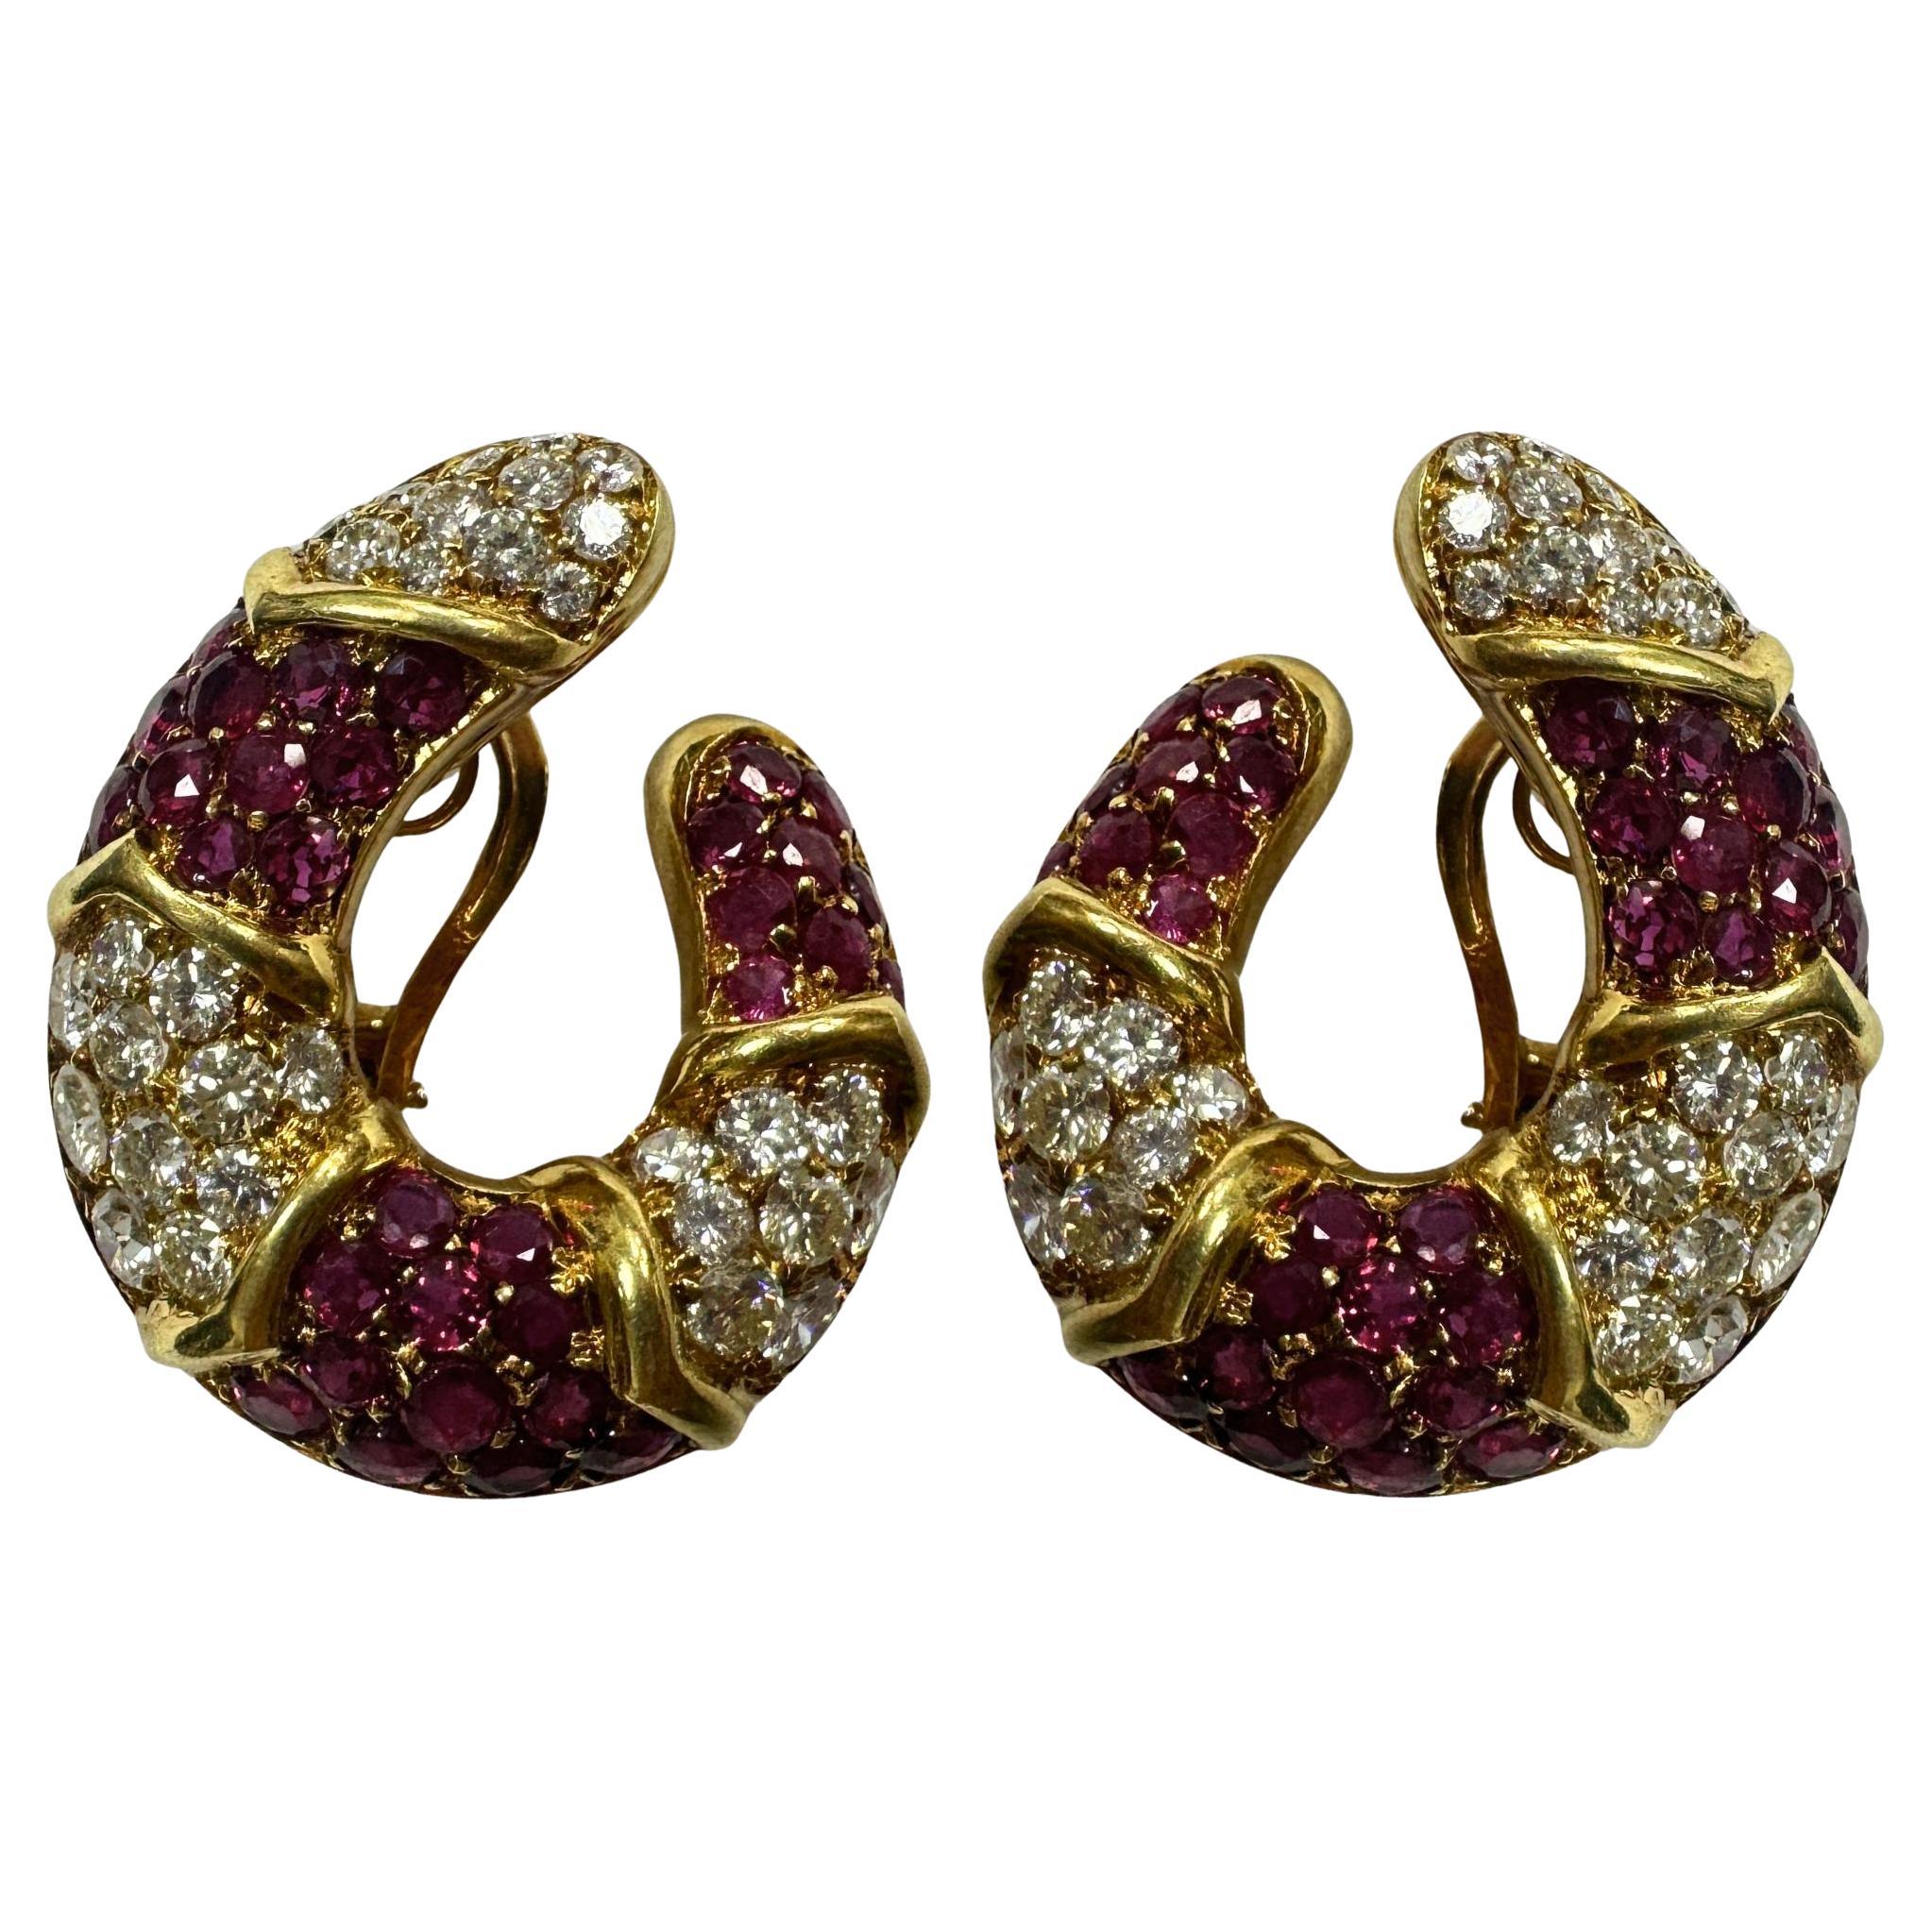 18k Italian Made Estate Diamond and Ruby Earrings